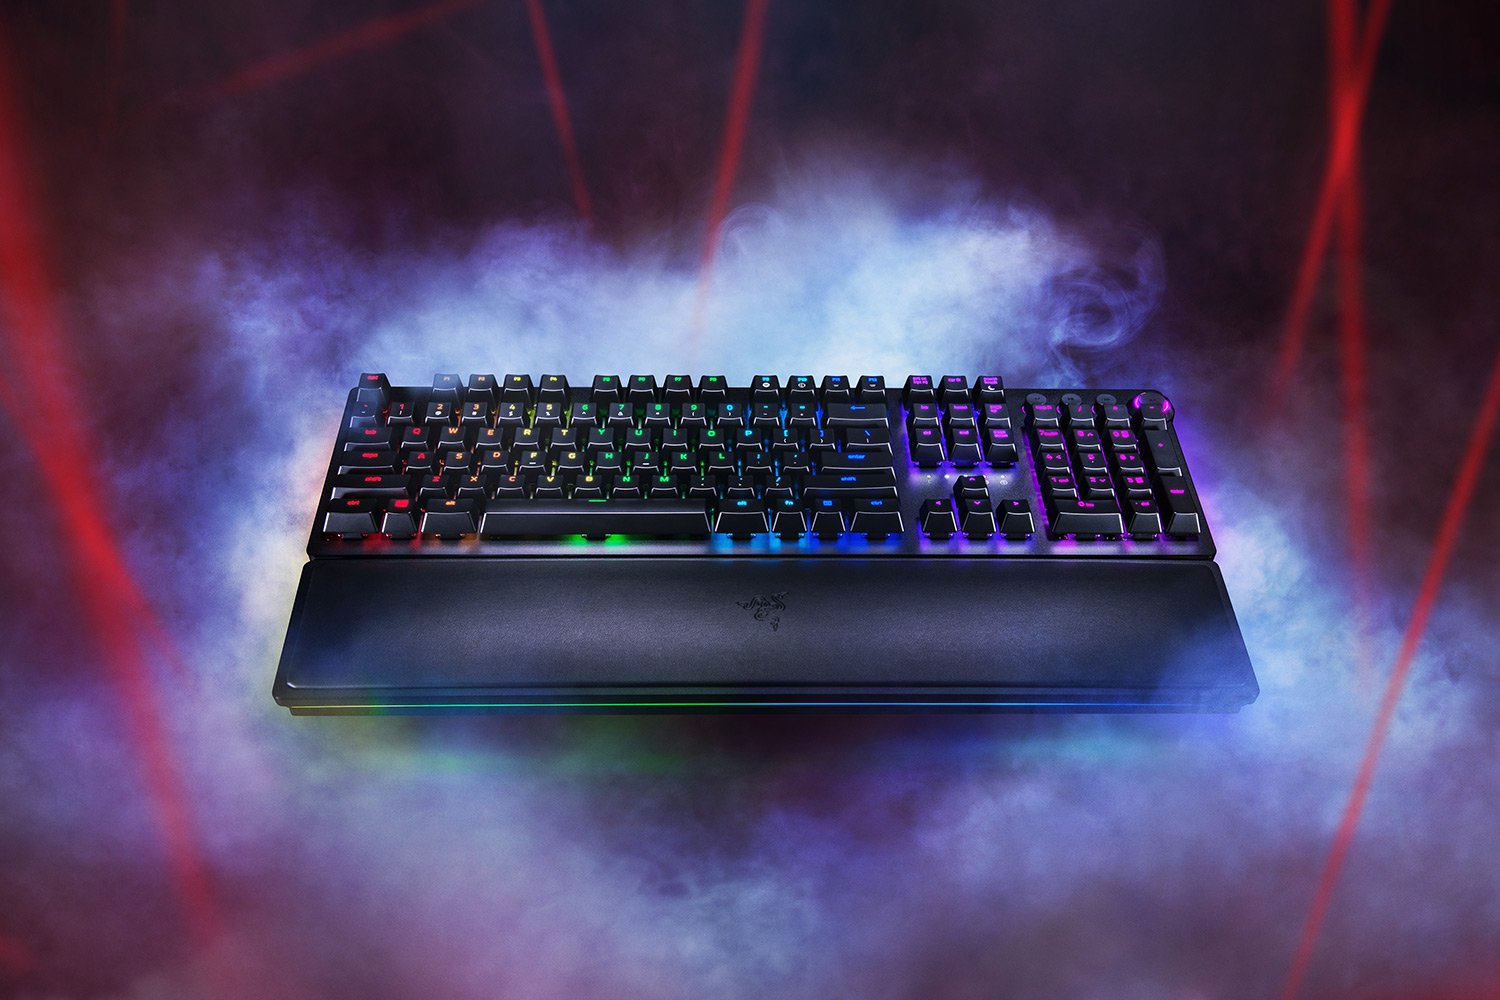 Razer Huntsman Elite Optical Mechanical Gaming Keyboard